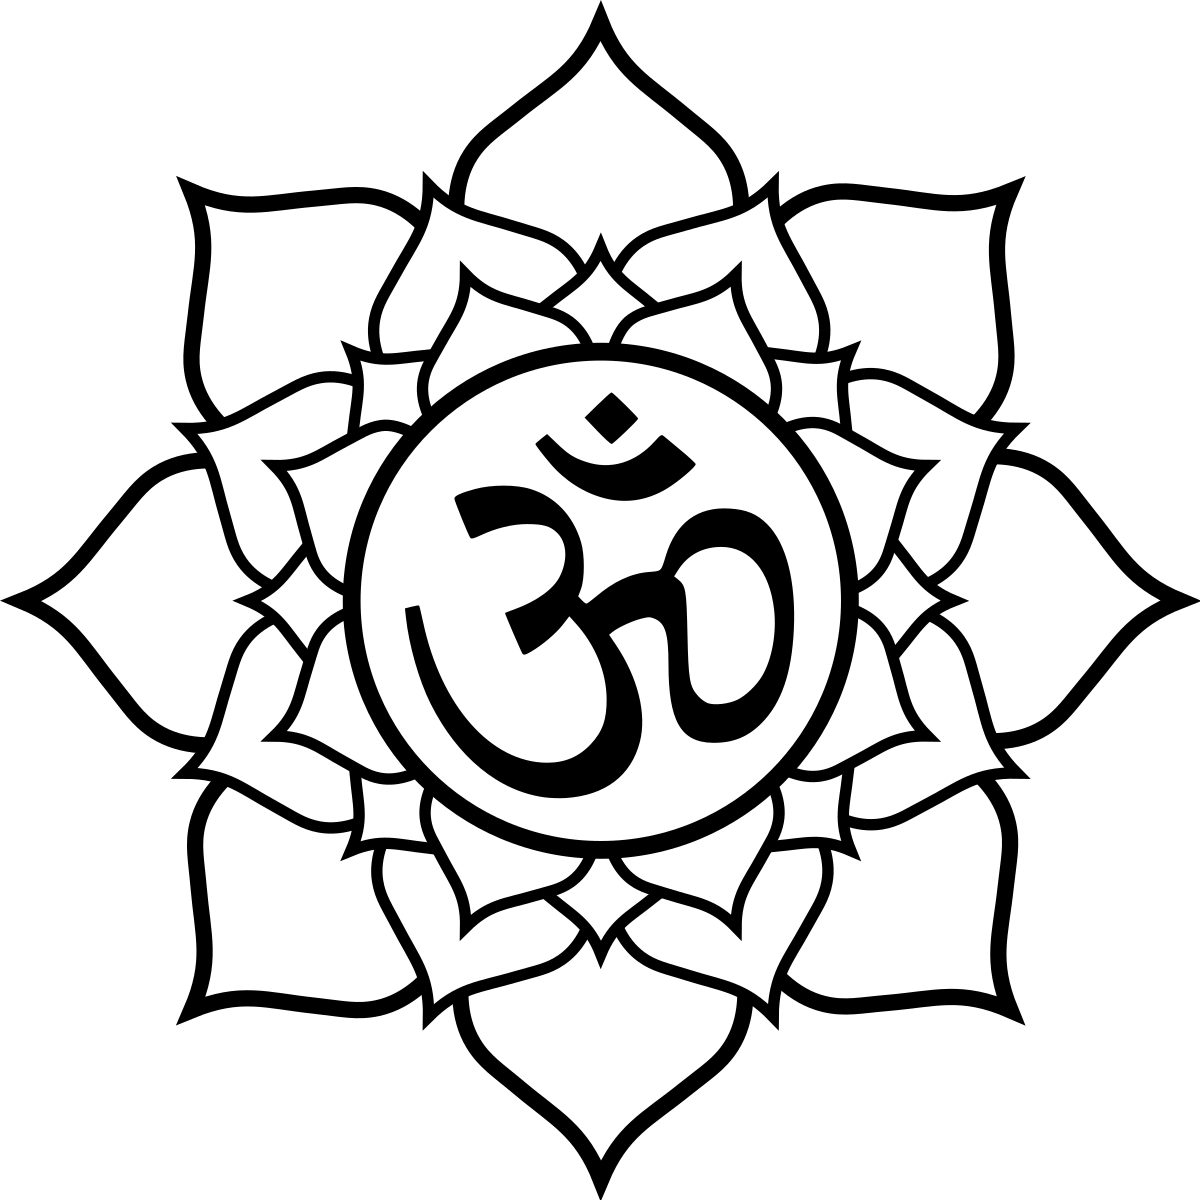 File:Lotus aum.svg - Wikimedia Commons